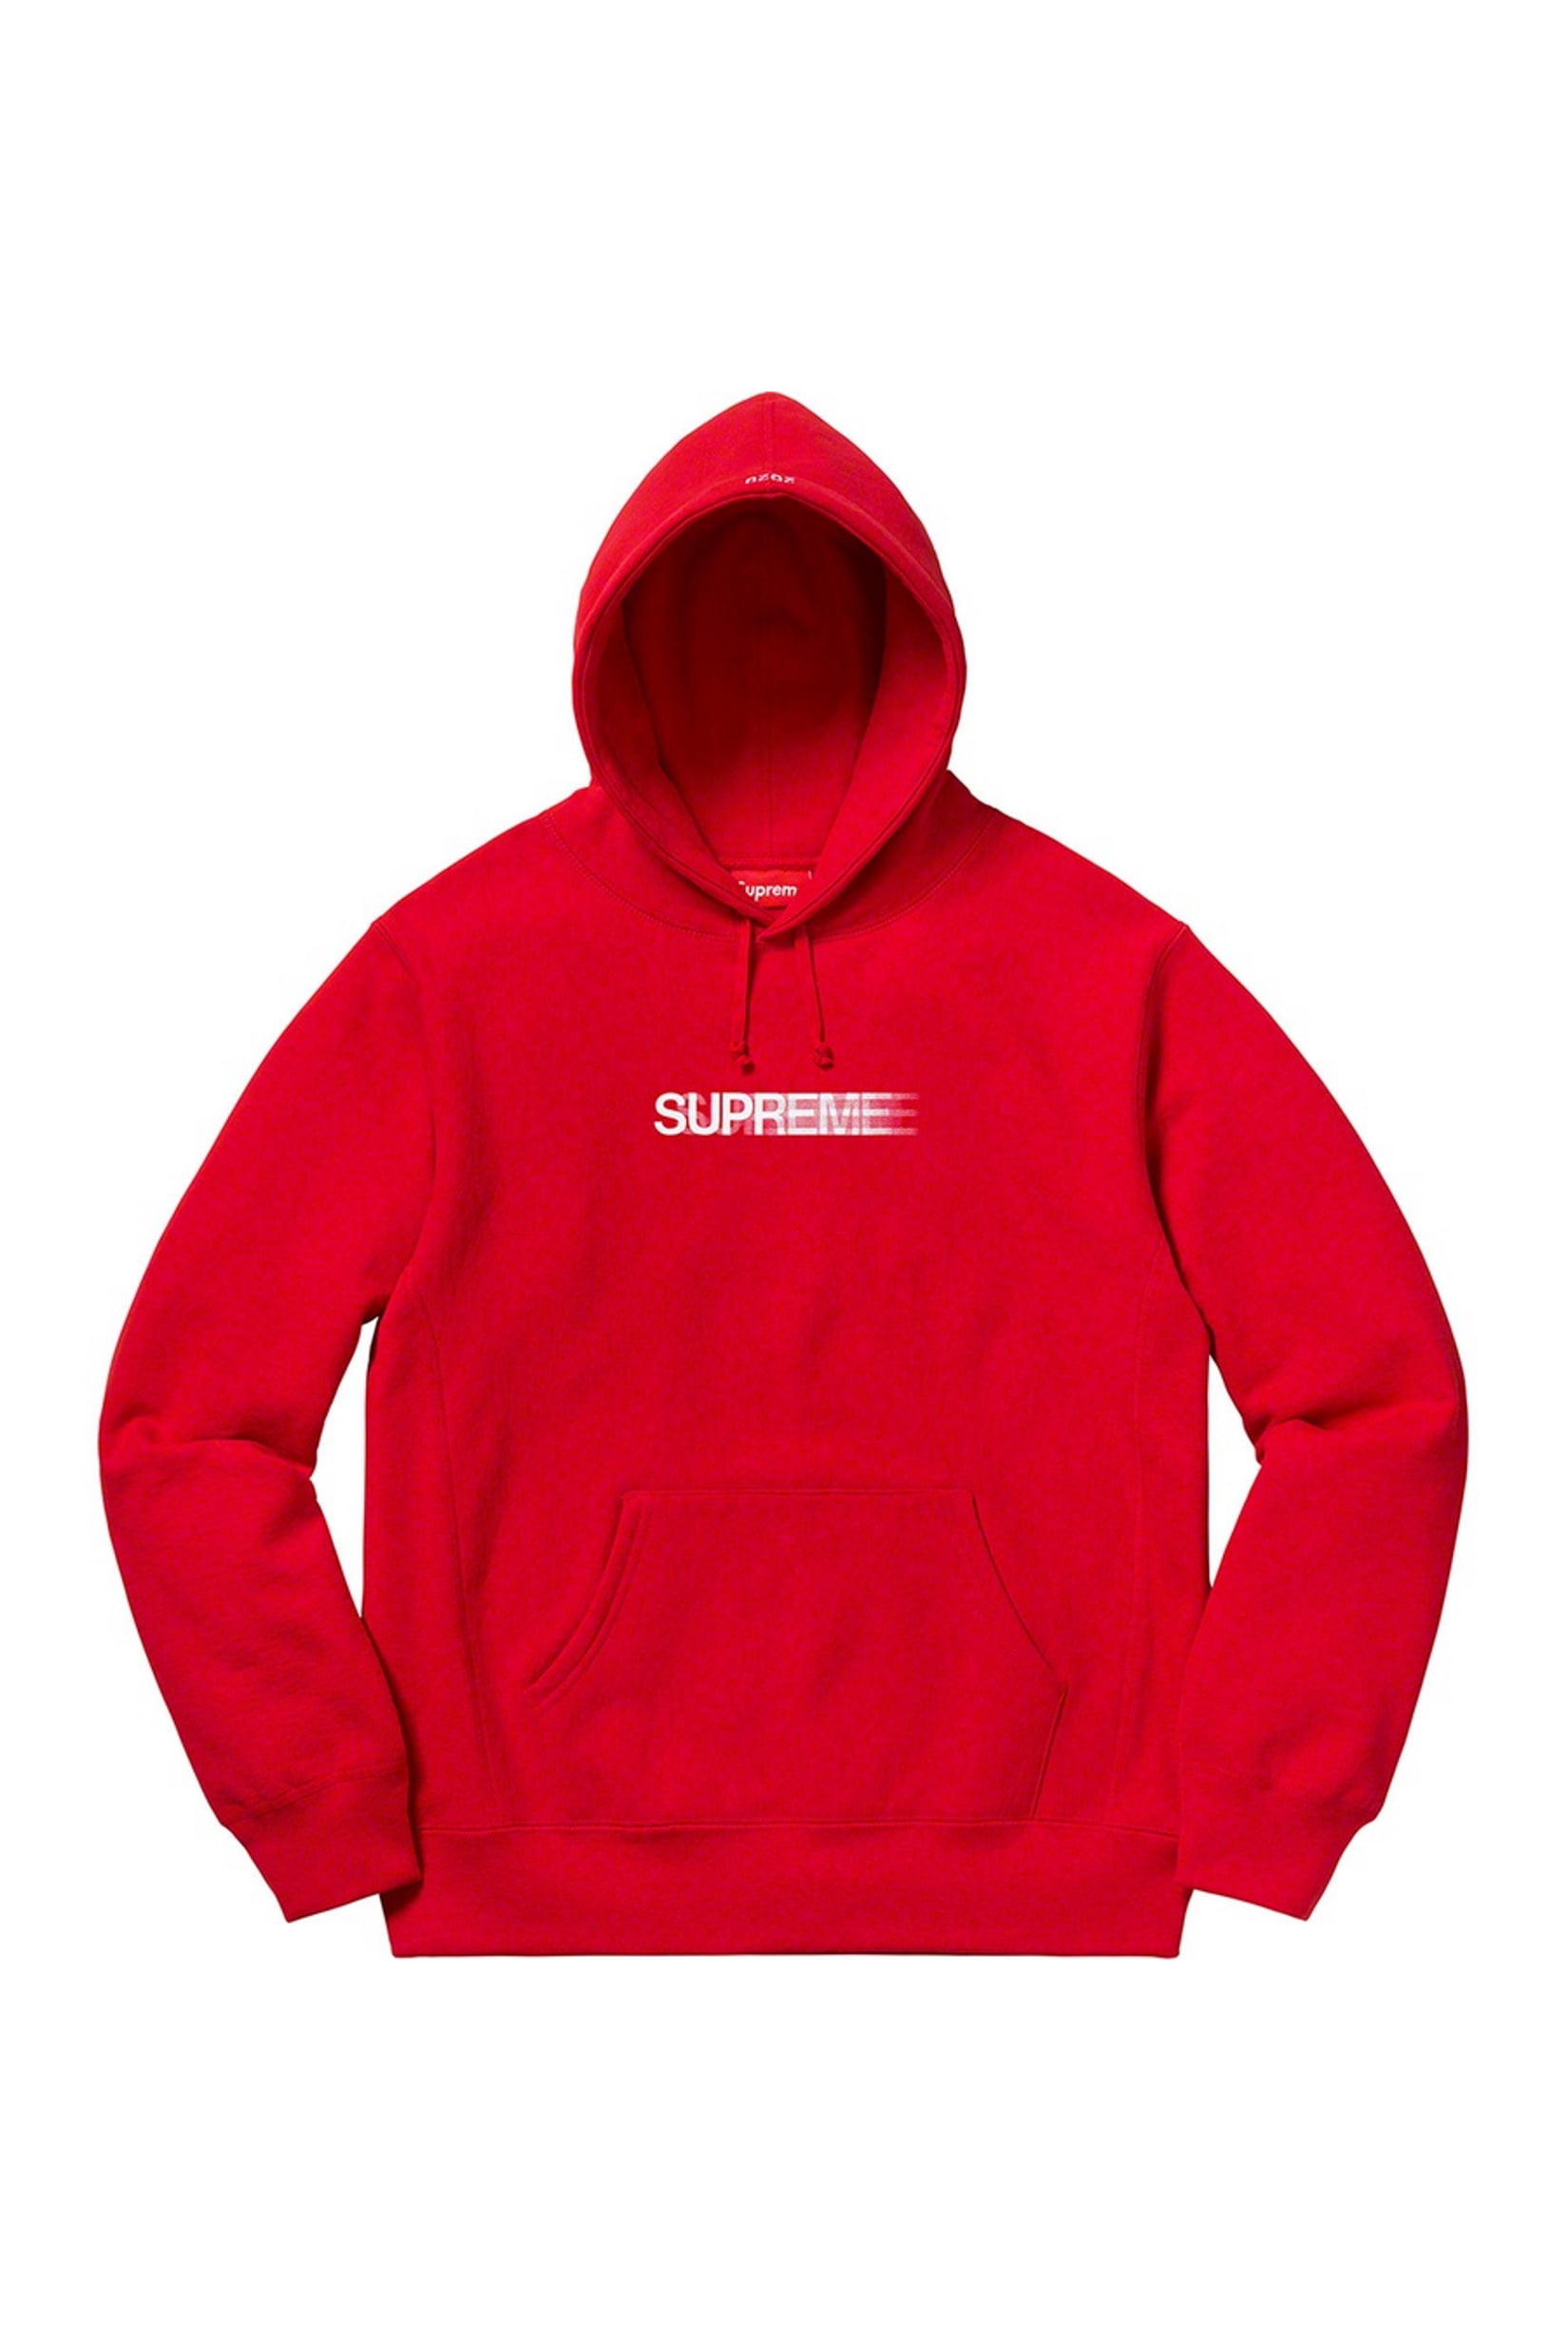 Supreme - Supreme Motion Logo Hooded Sweatshirt Red - Size Large